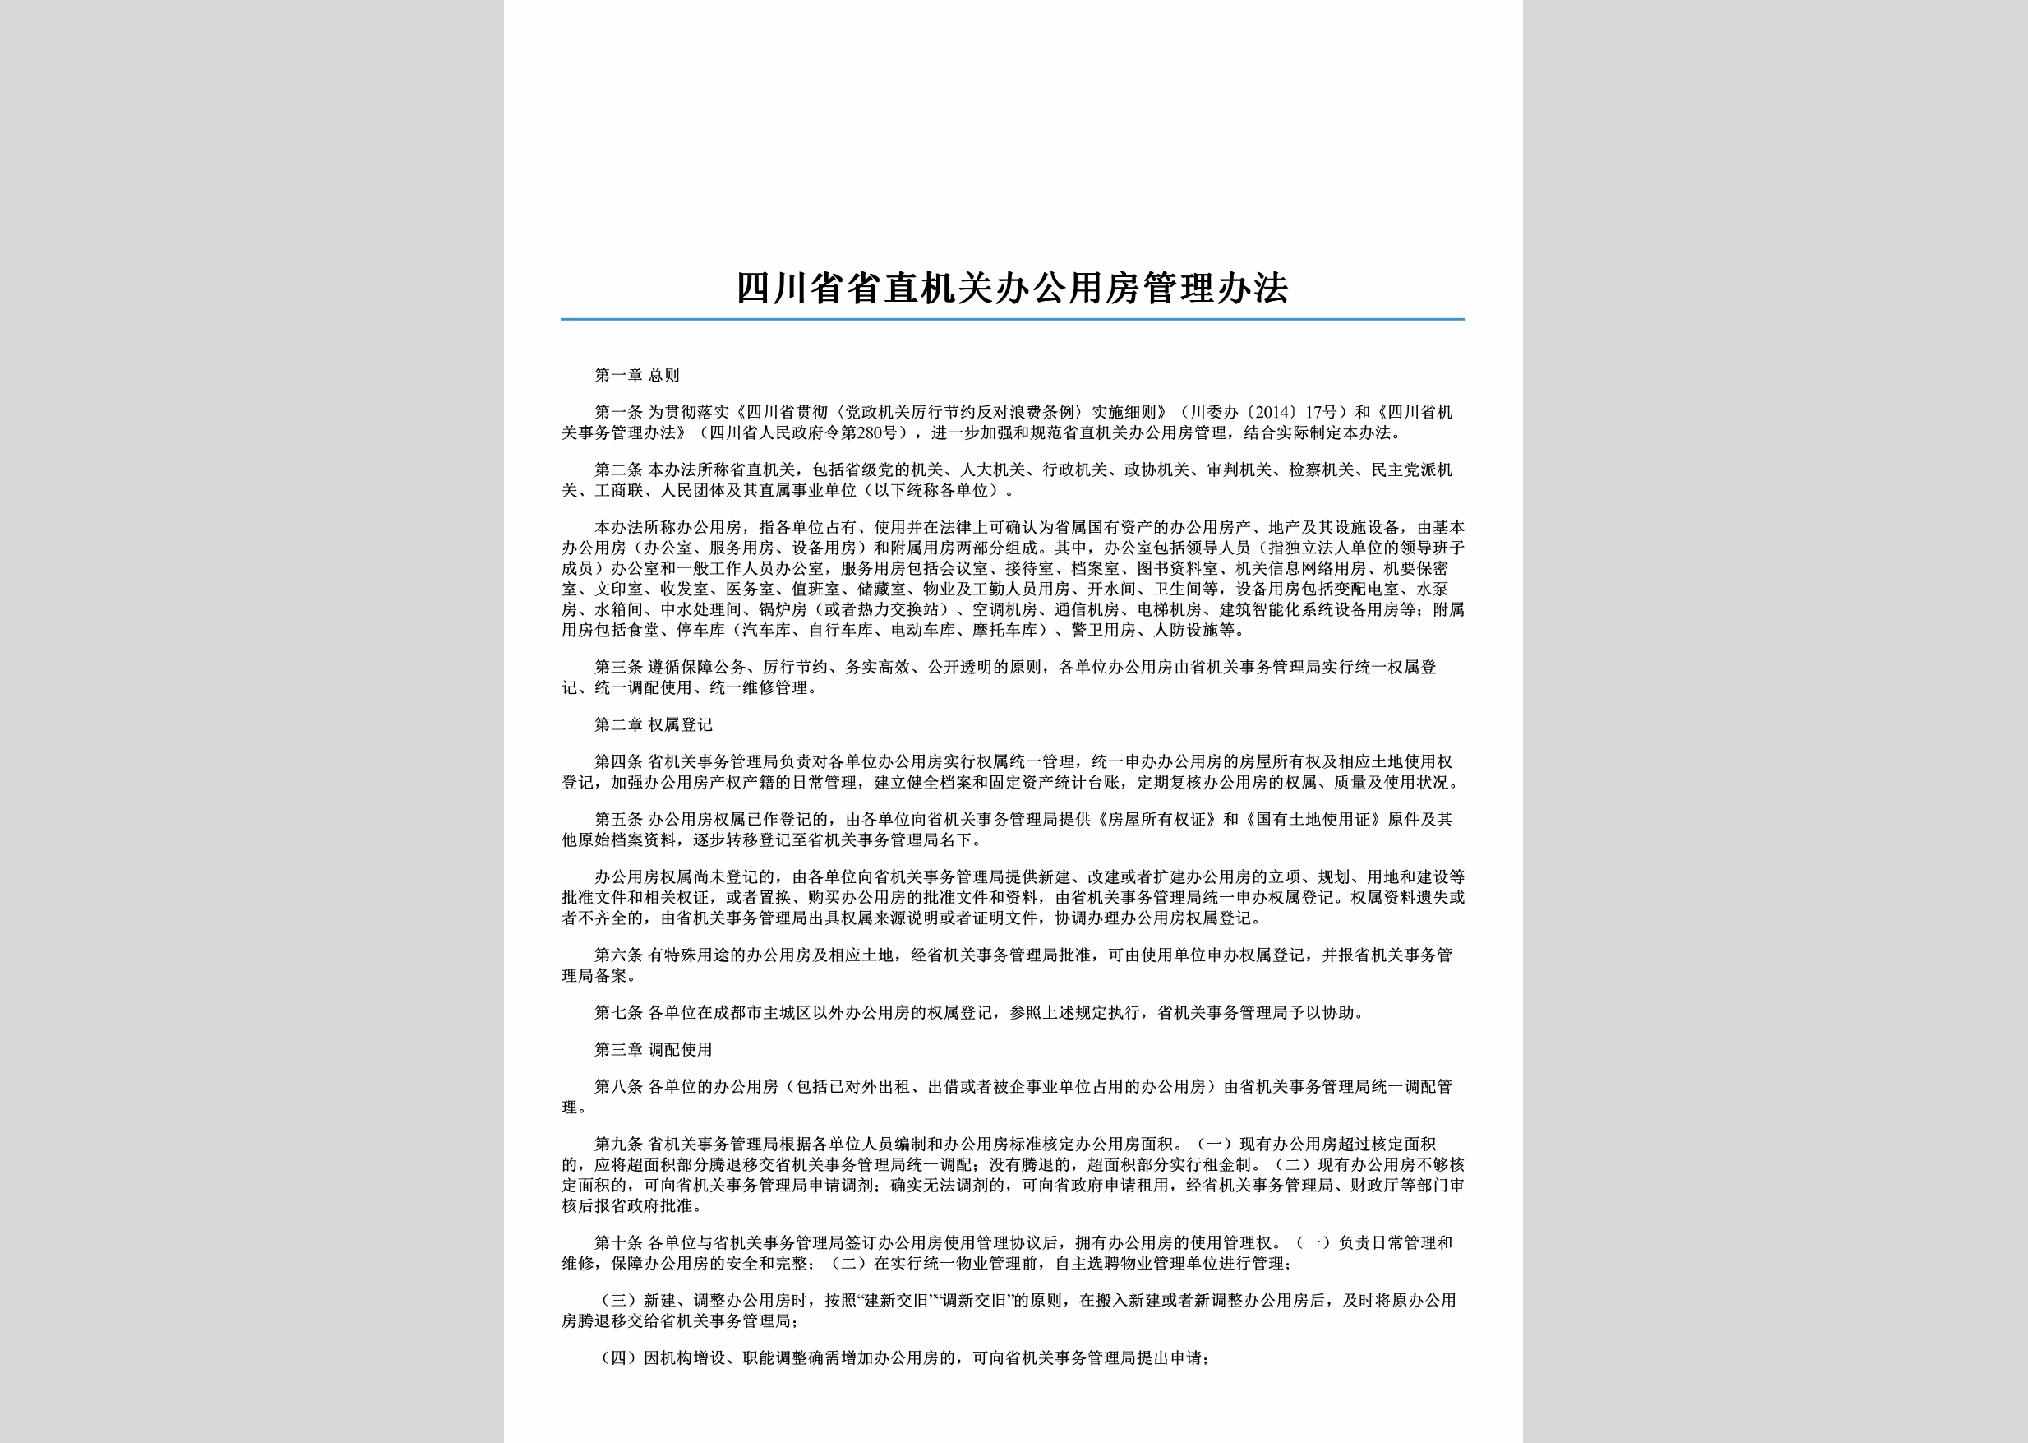 SC-JGYFGLBF-2015：四川省省直机关办公用房管理办法